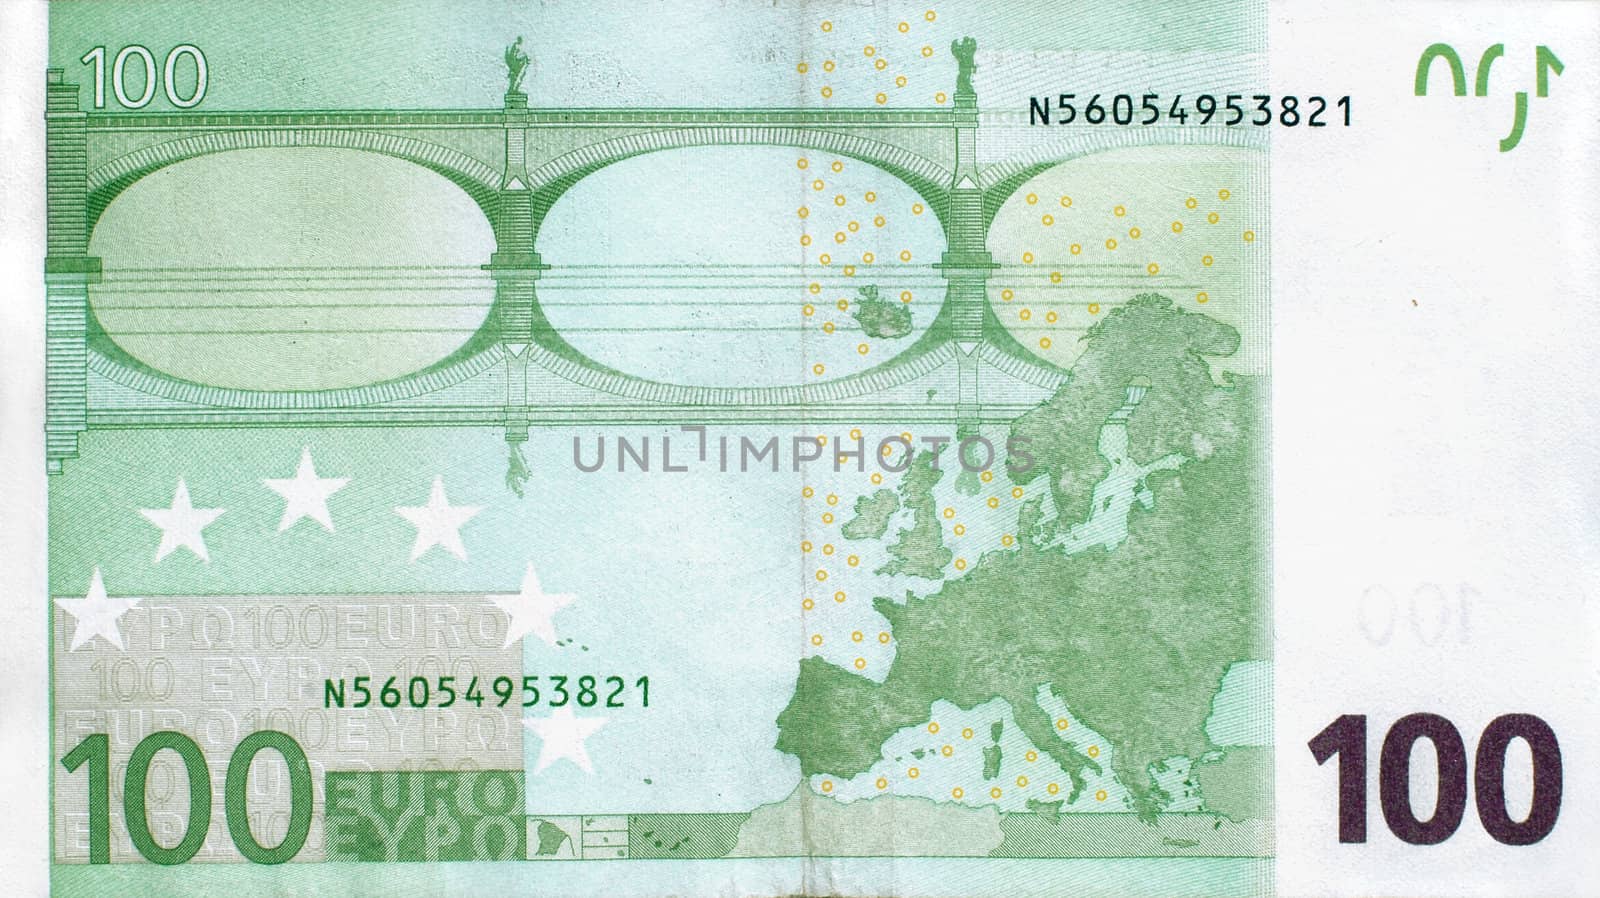 Hundred euro bank note